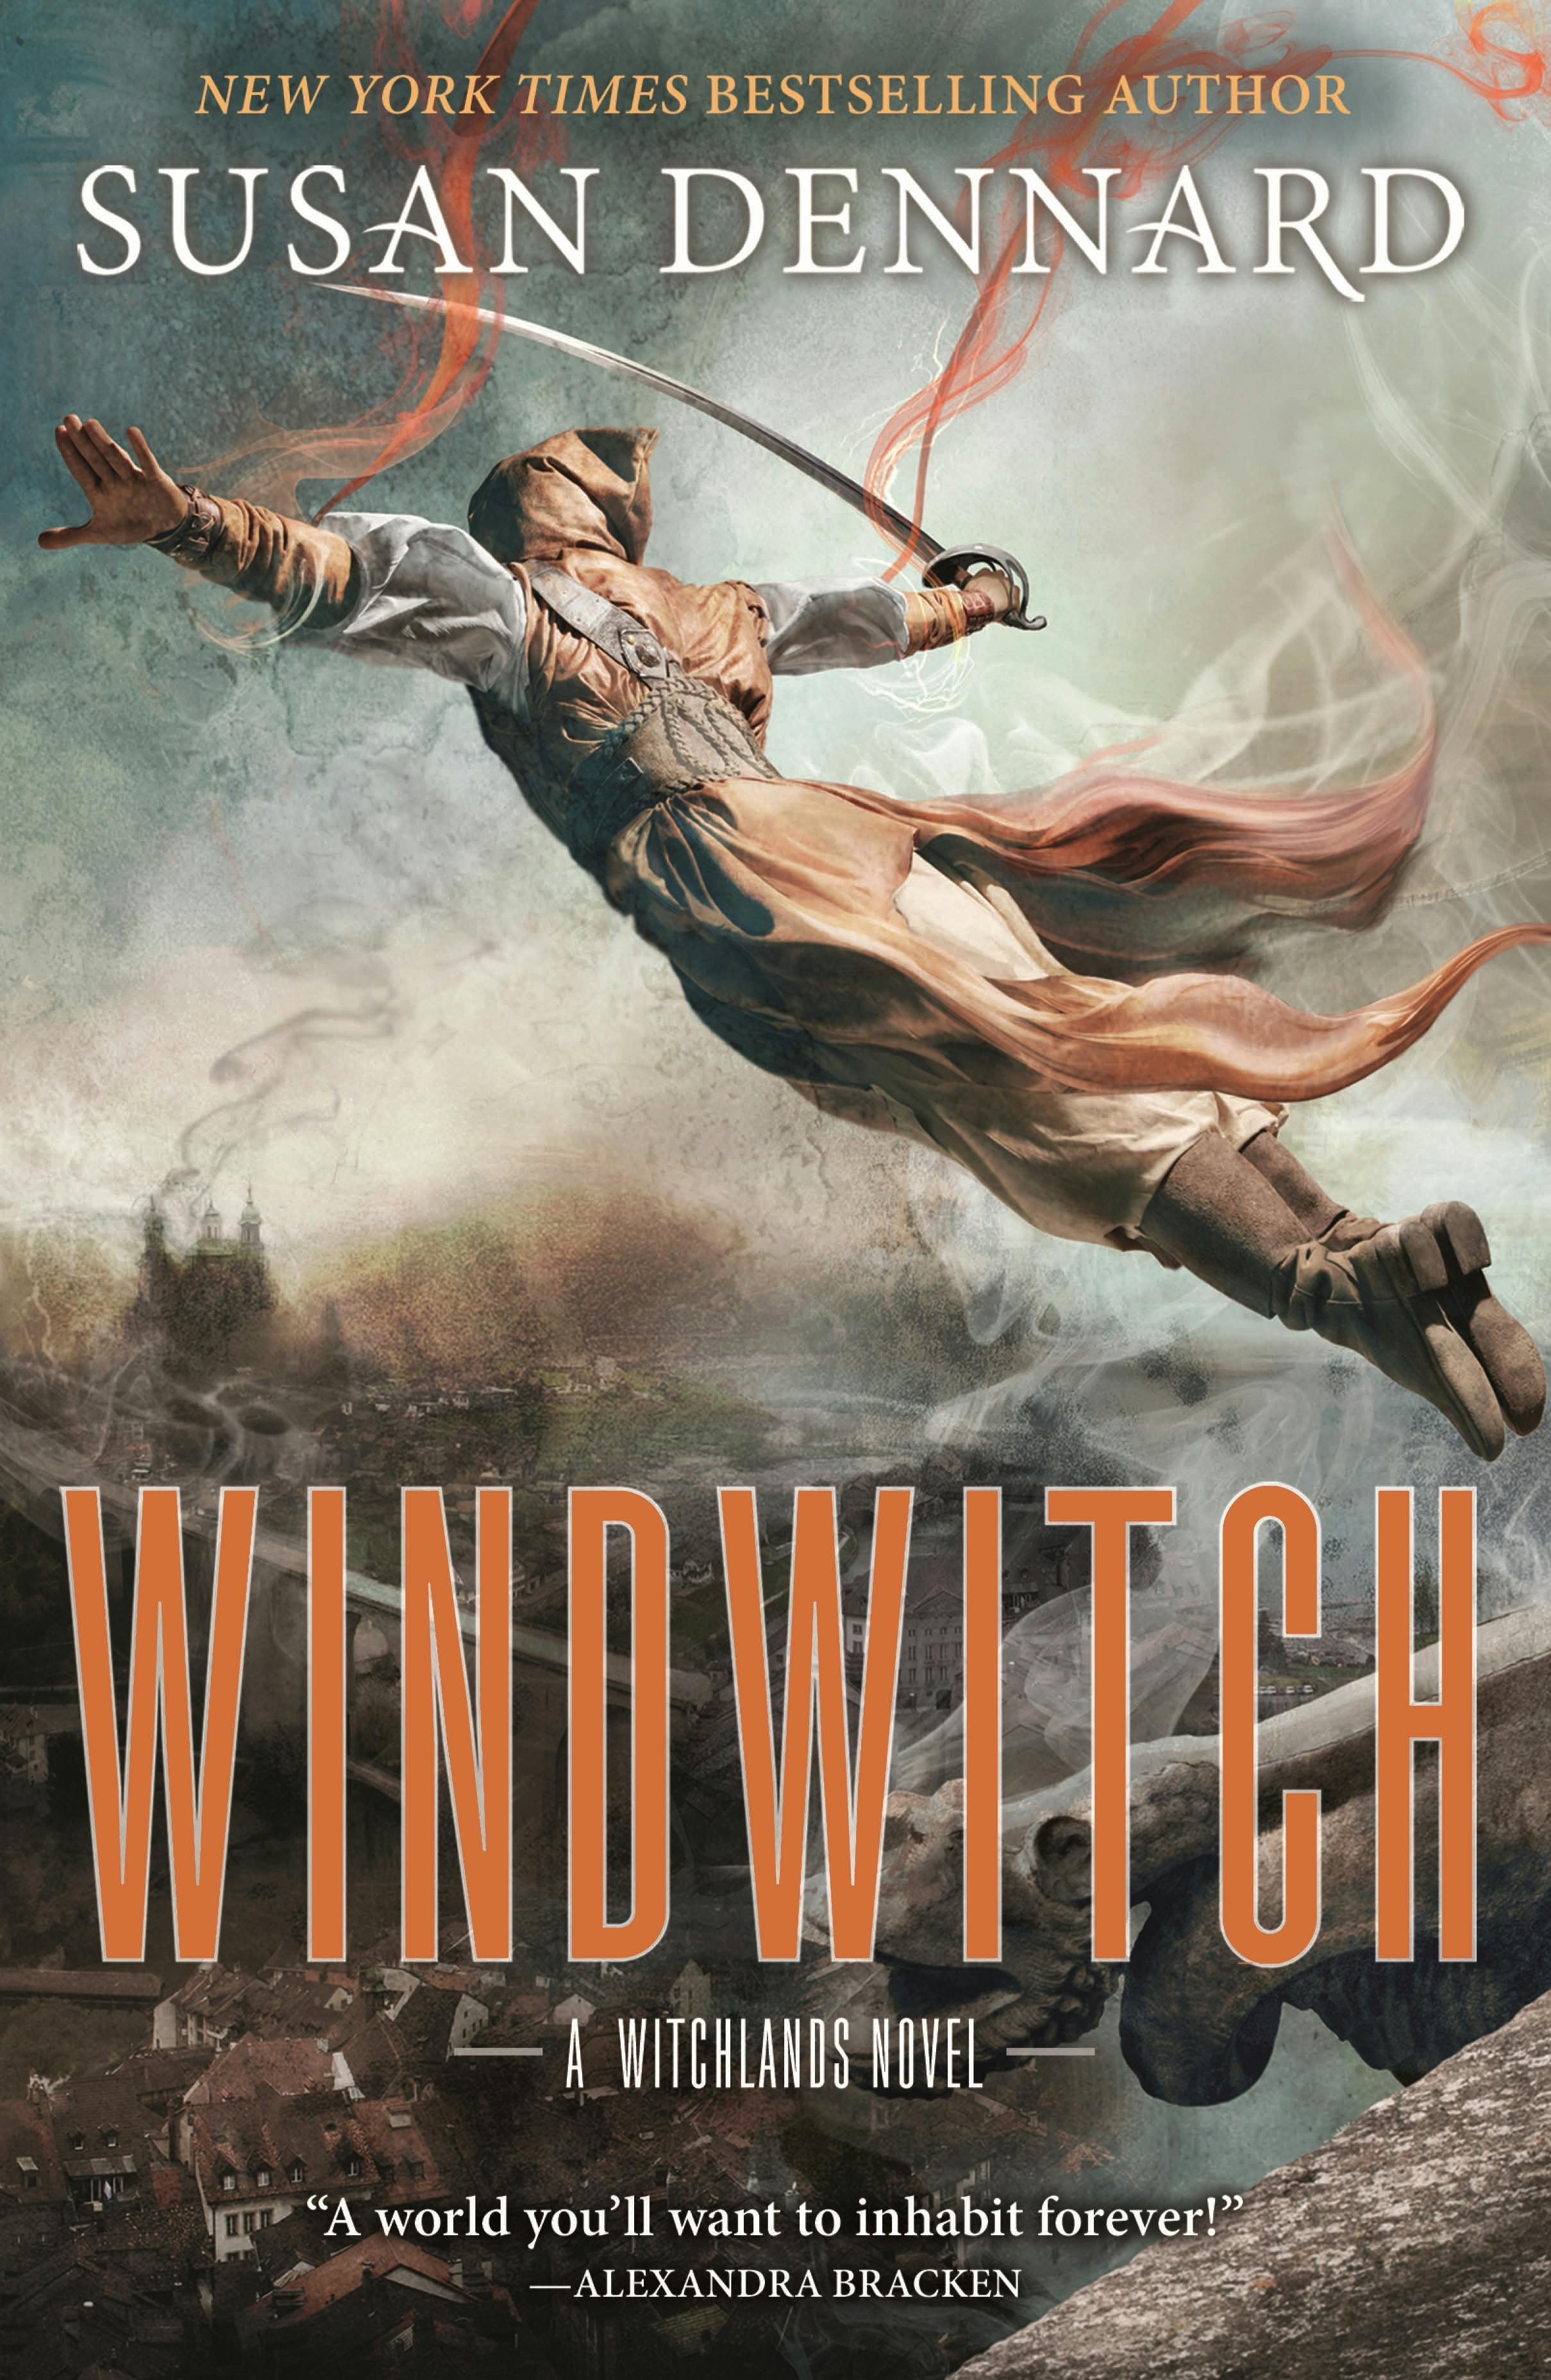 Image of Windwitch